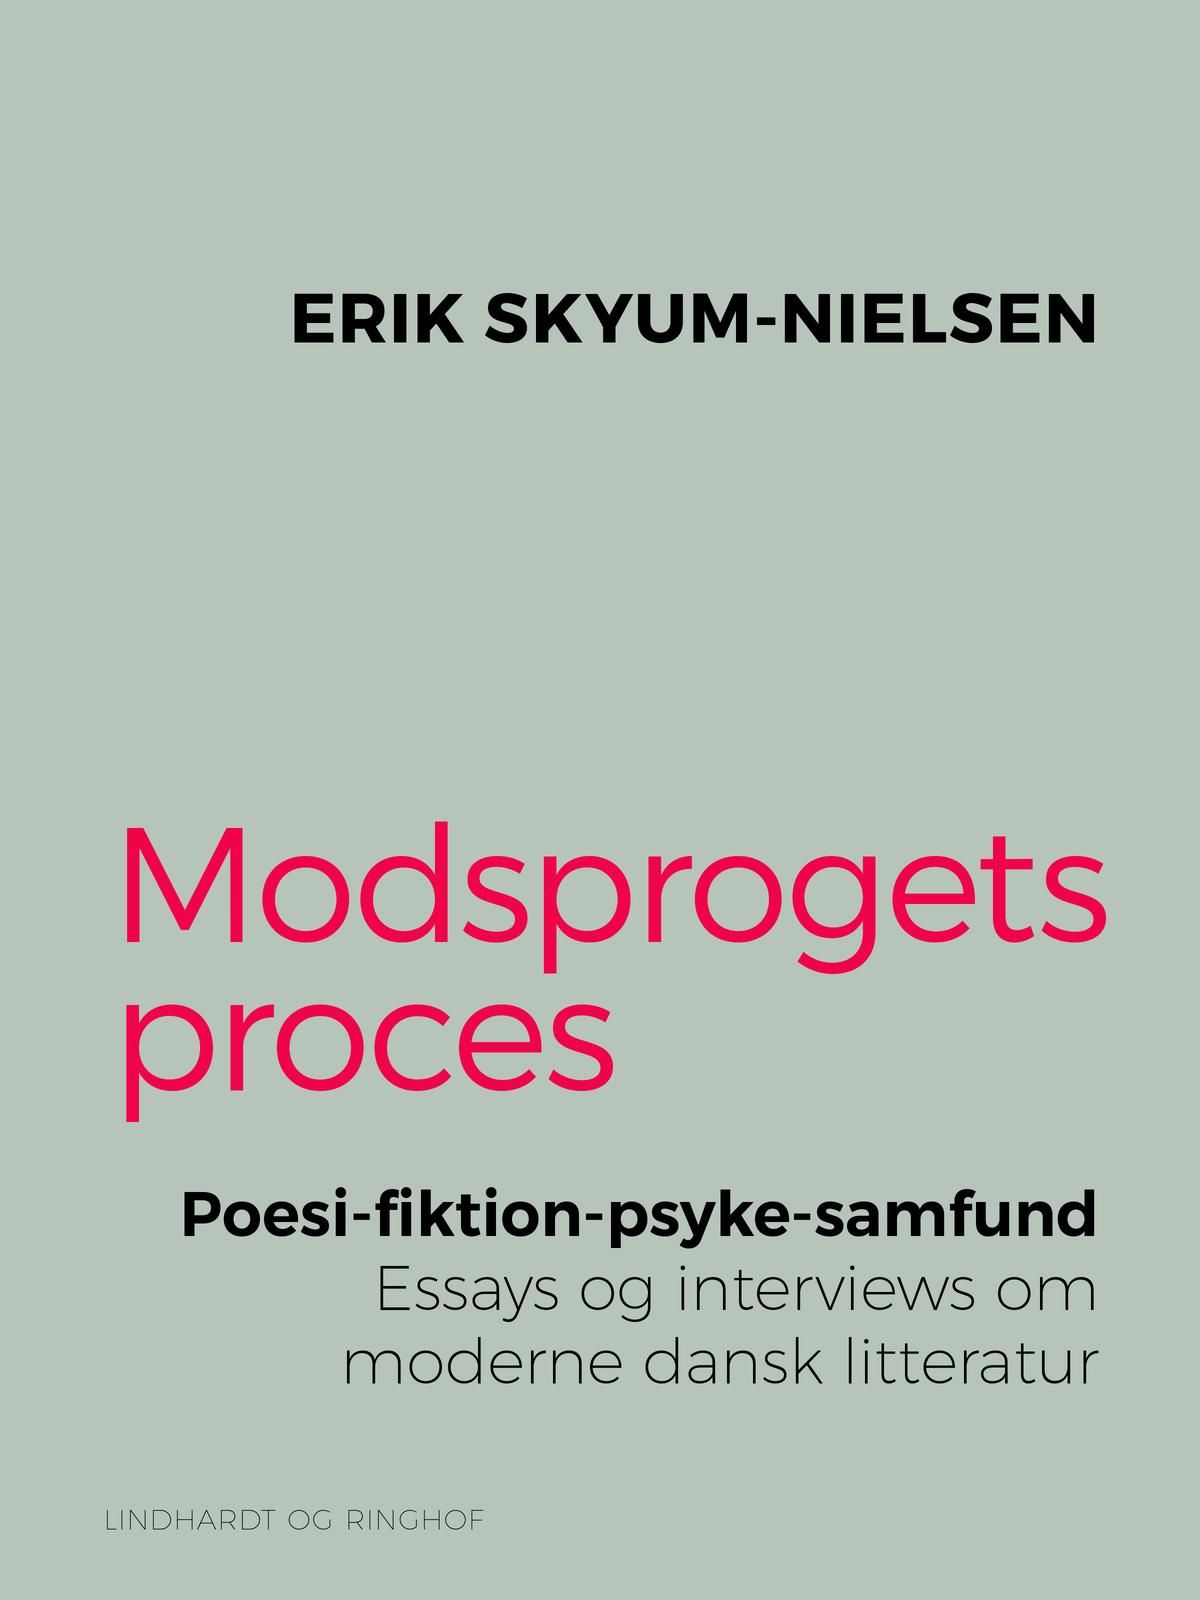 Modsprogets proces. Poesi - fiktion - psyke - samfund. Essays og interviews om moderne dansk litteratur, e-bok av Erik Skyum-Nielsen